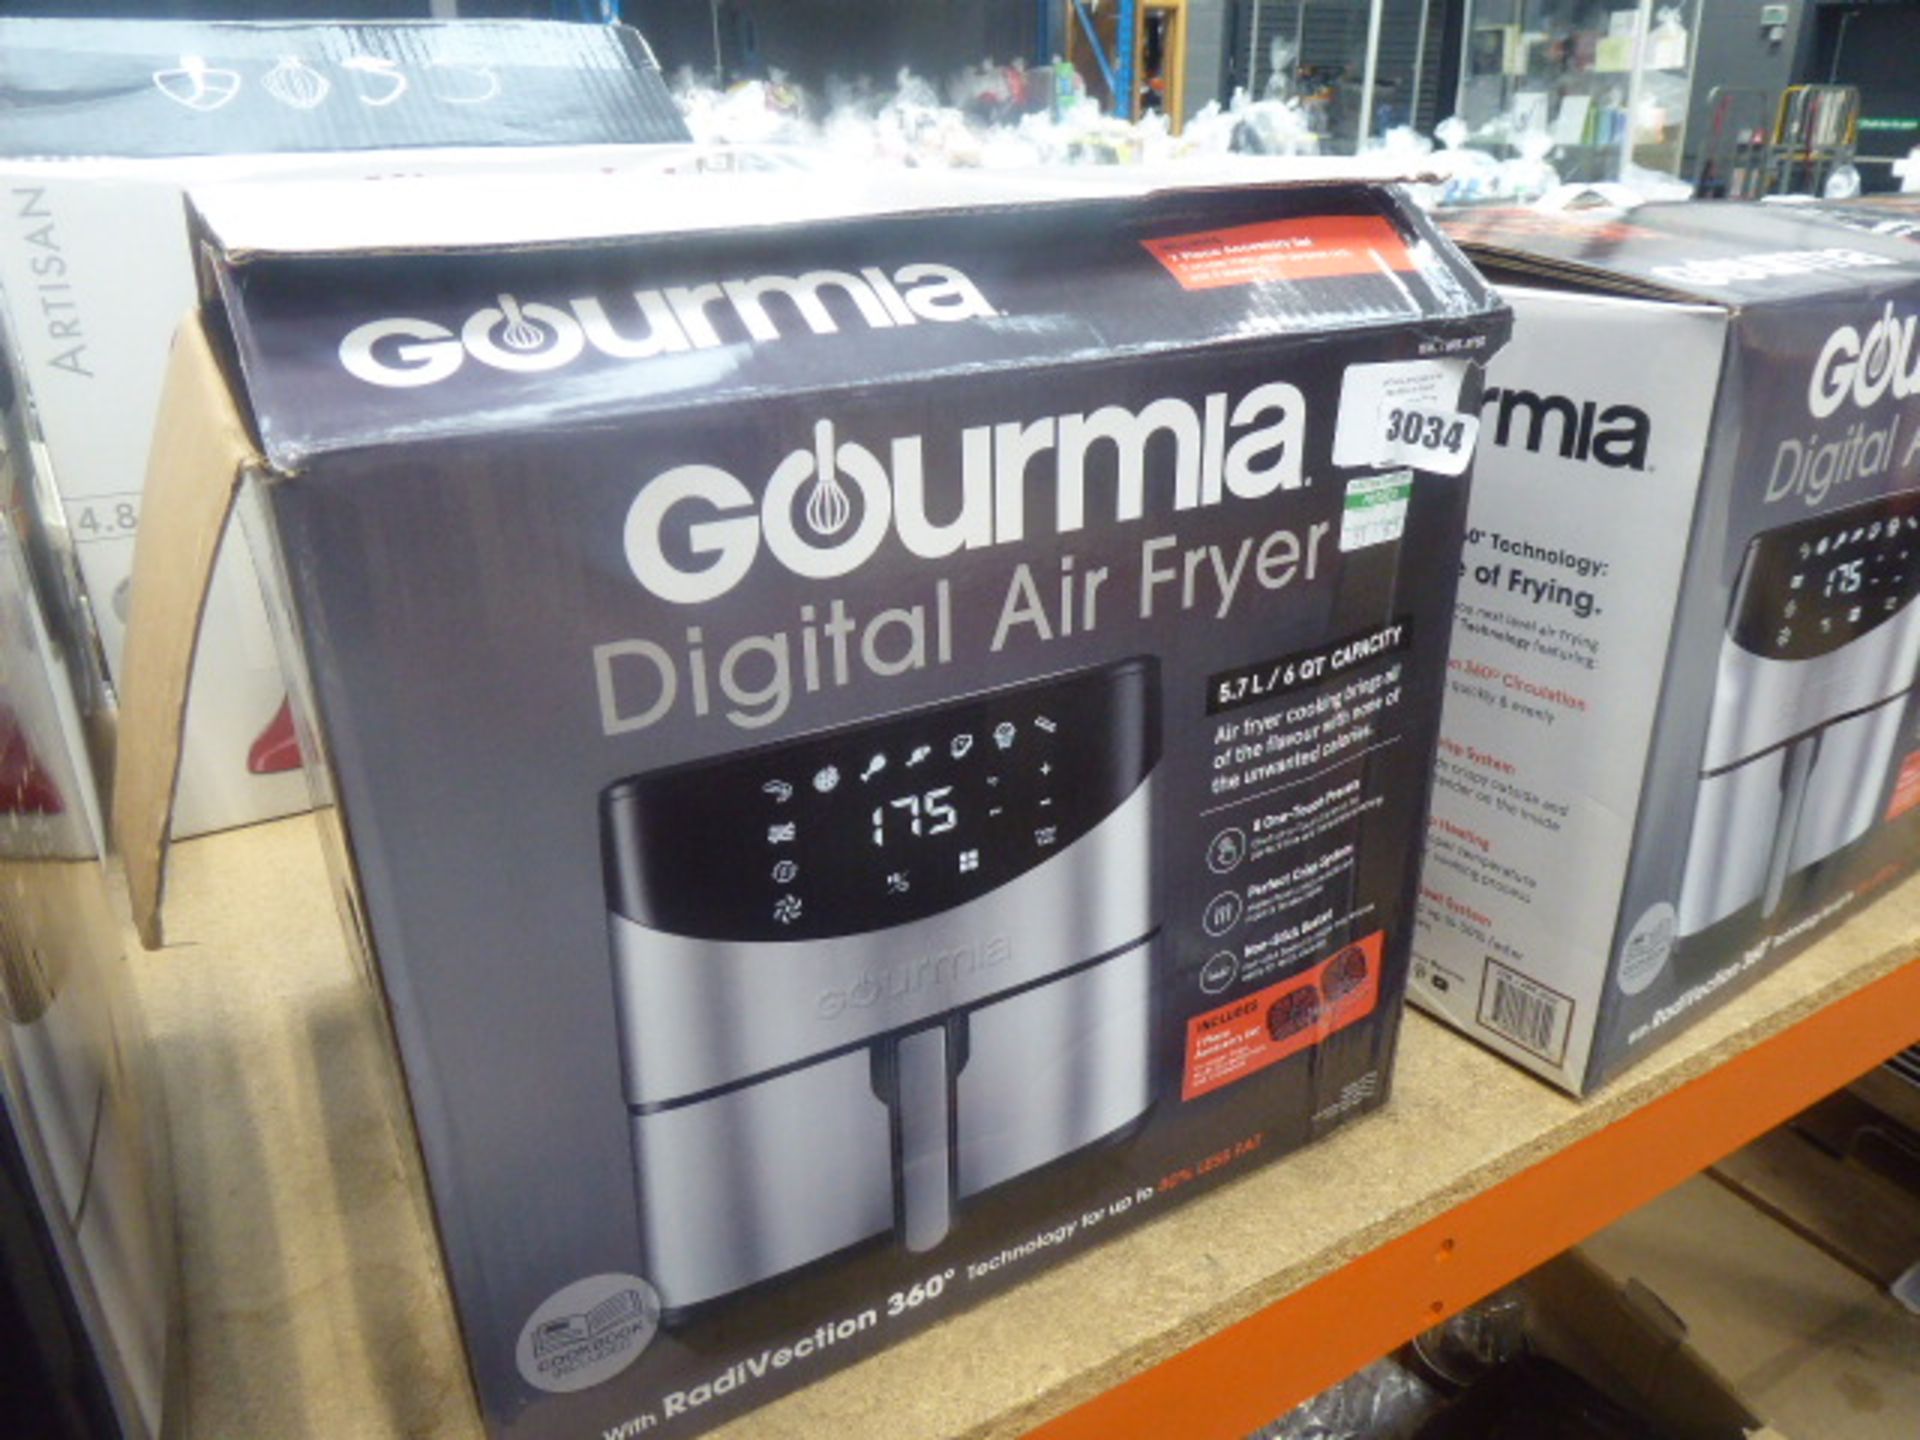 3032 Gourmia digital air fryer